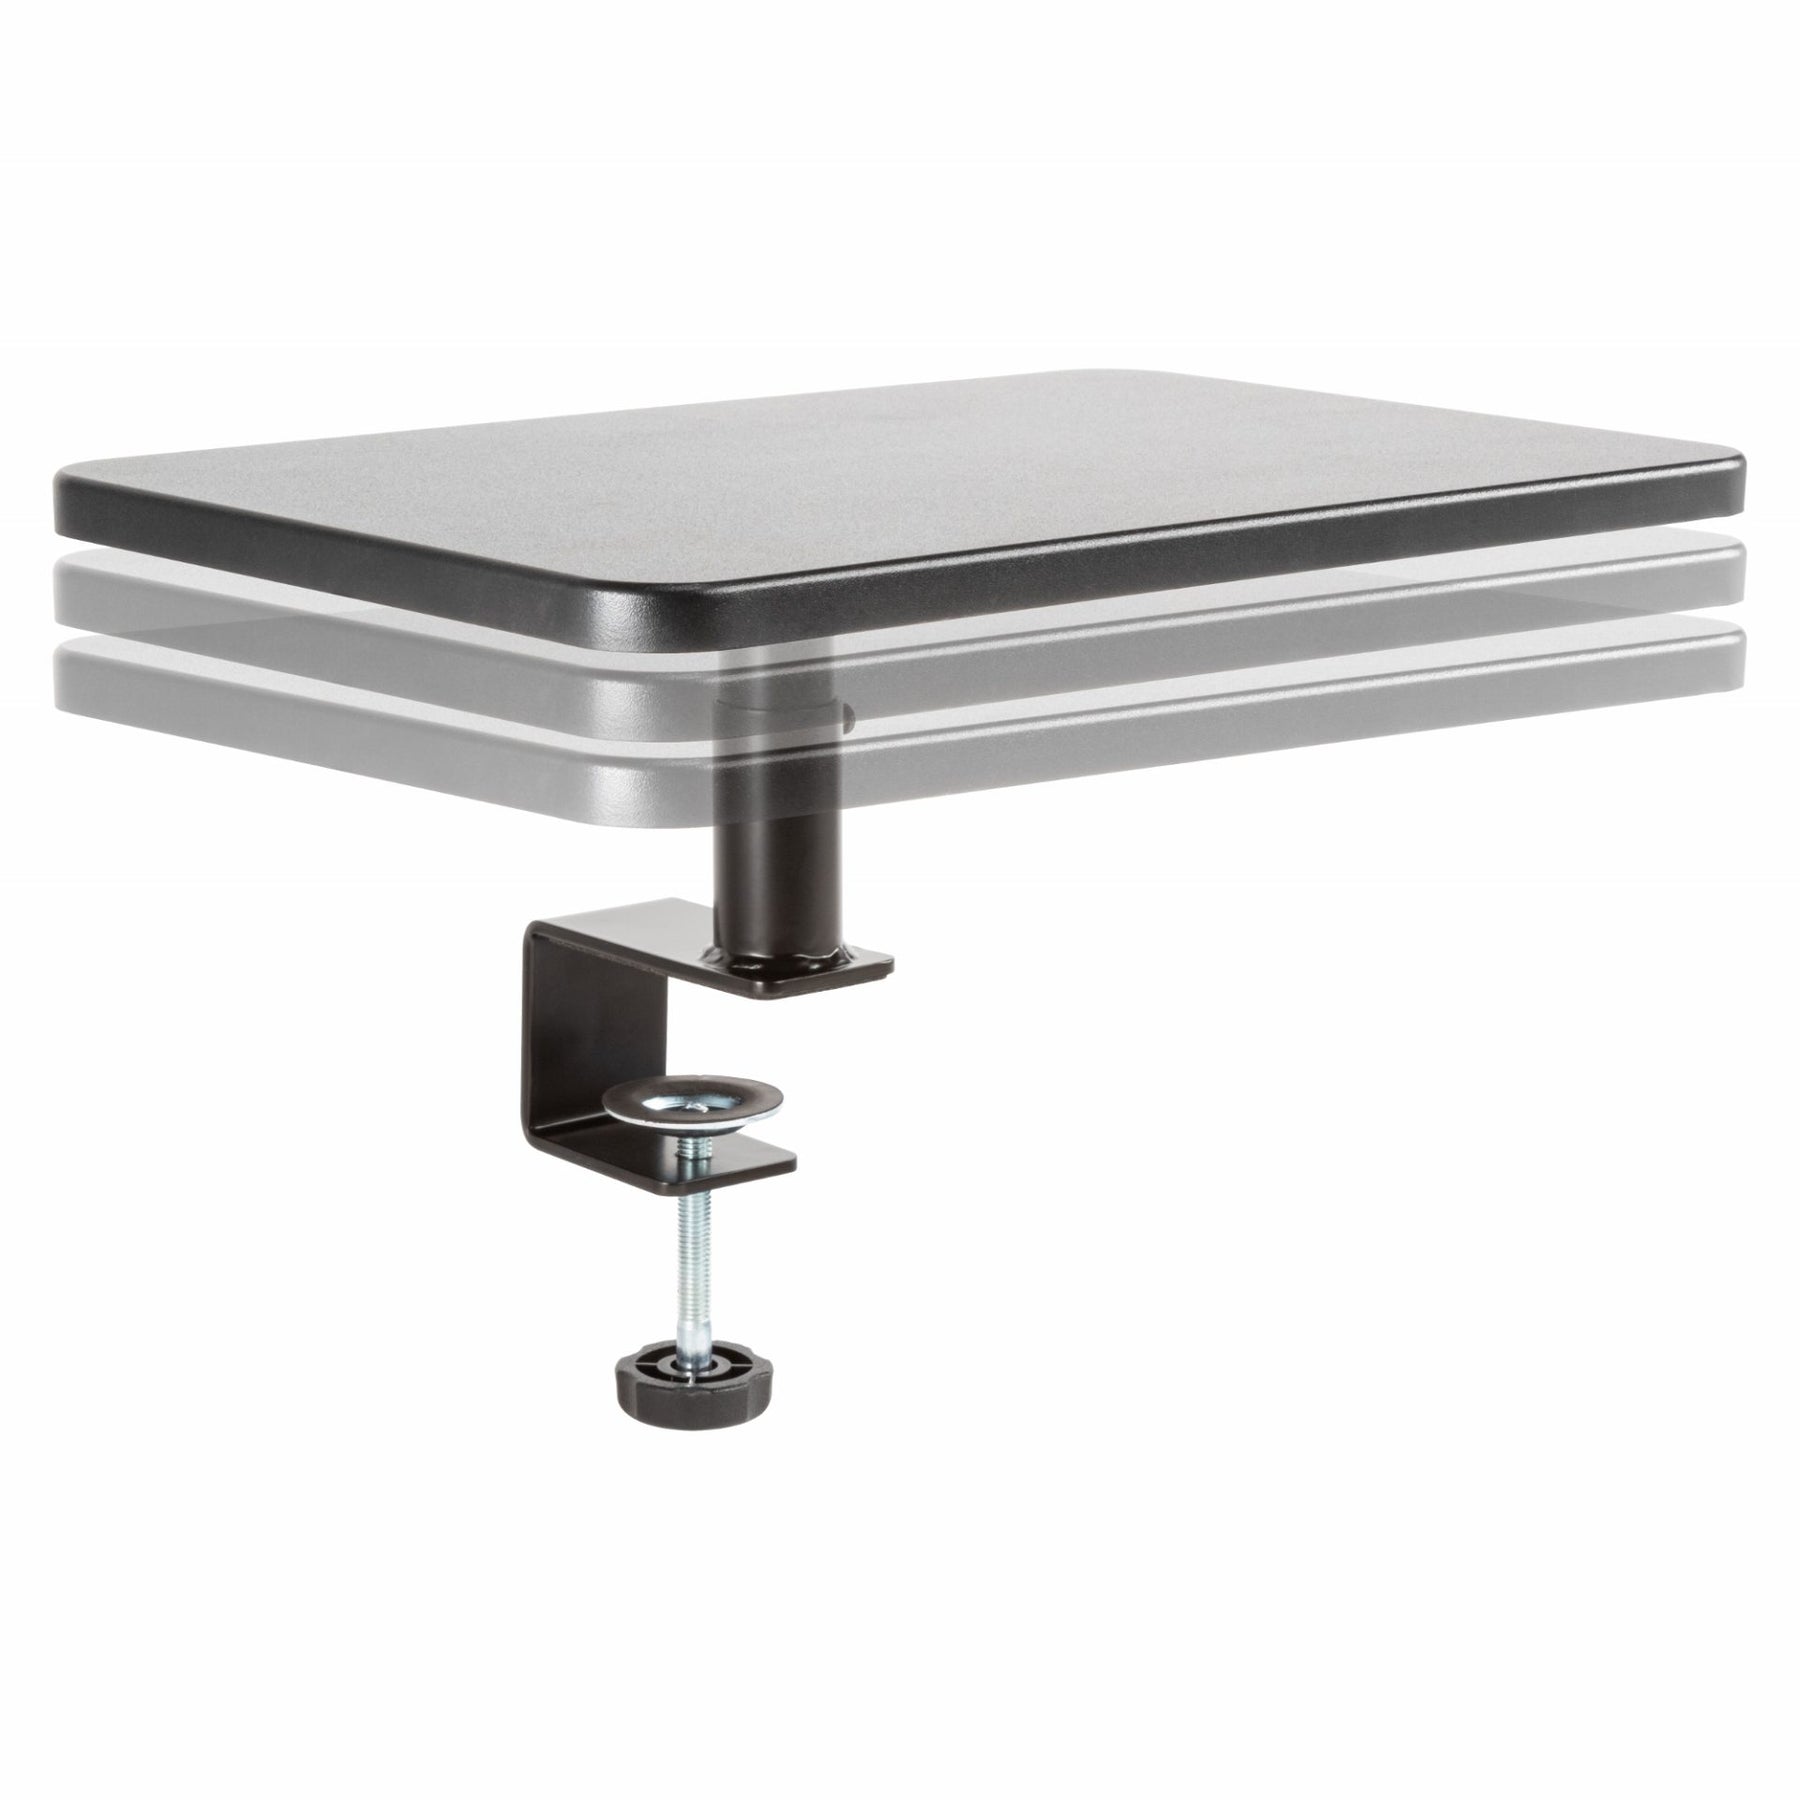 Metal Art ErgoTwin Height Adjustable Dual Monitor Stand – AllsopTech